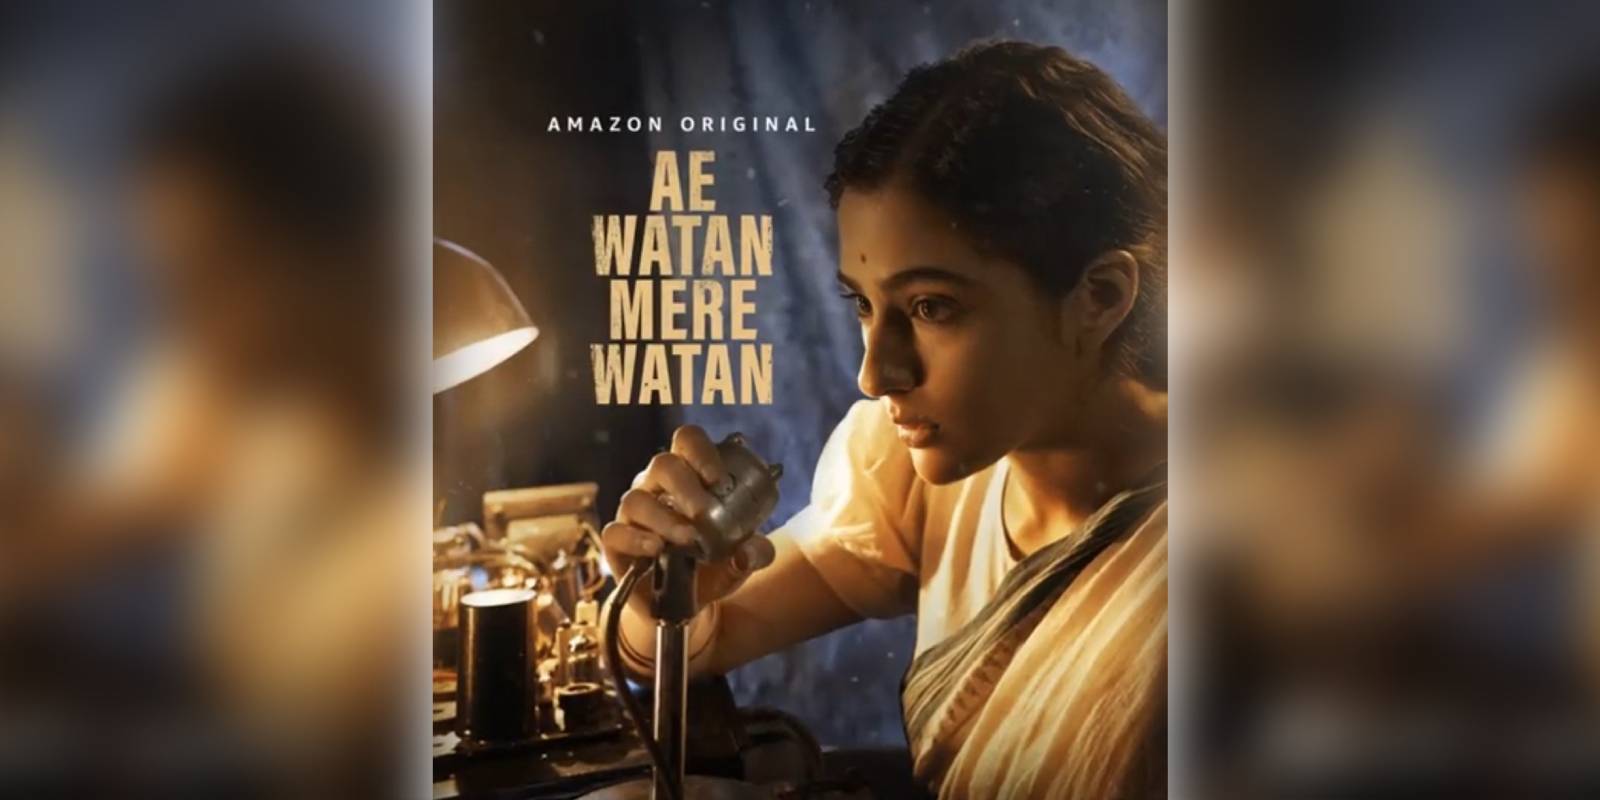 A poster of the film Ae Watan Mere Watan